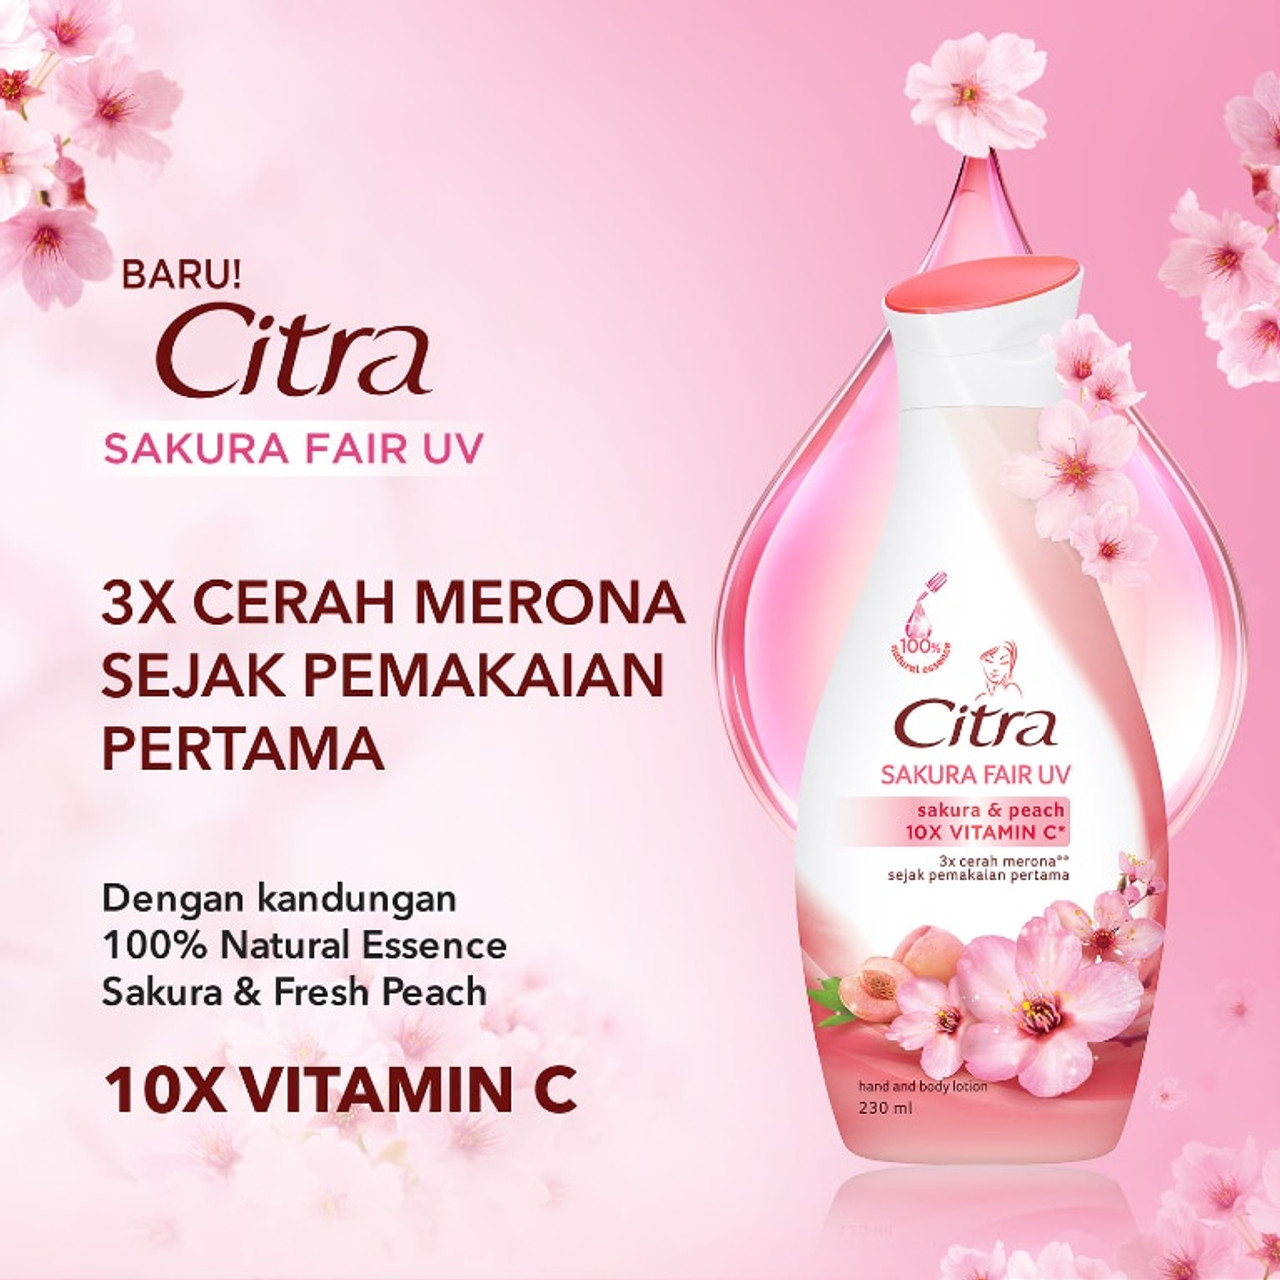 Citra Sakura Fair UV Body Lotion, 230 ml